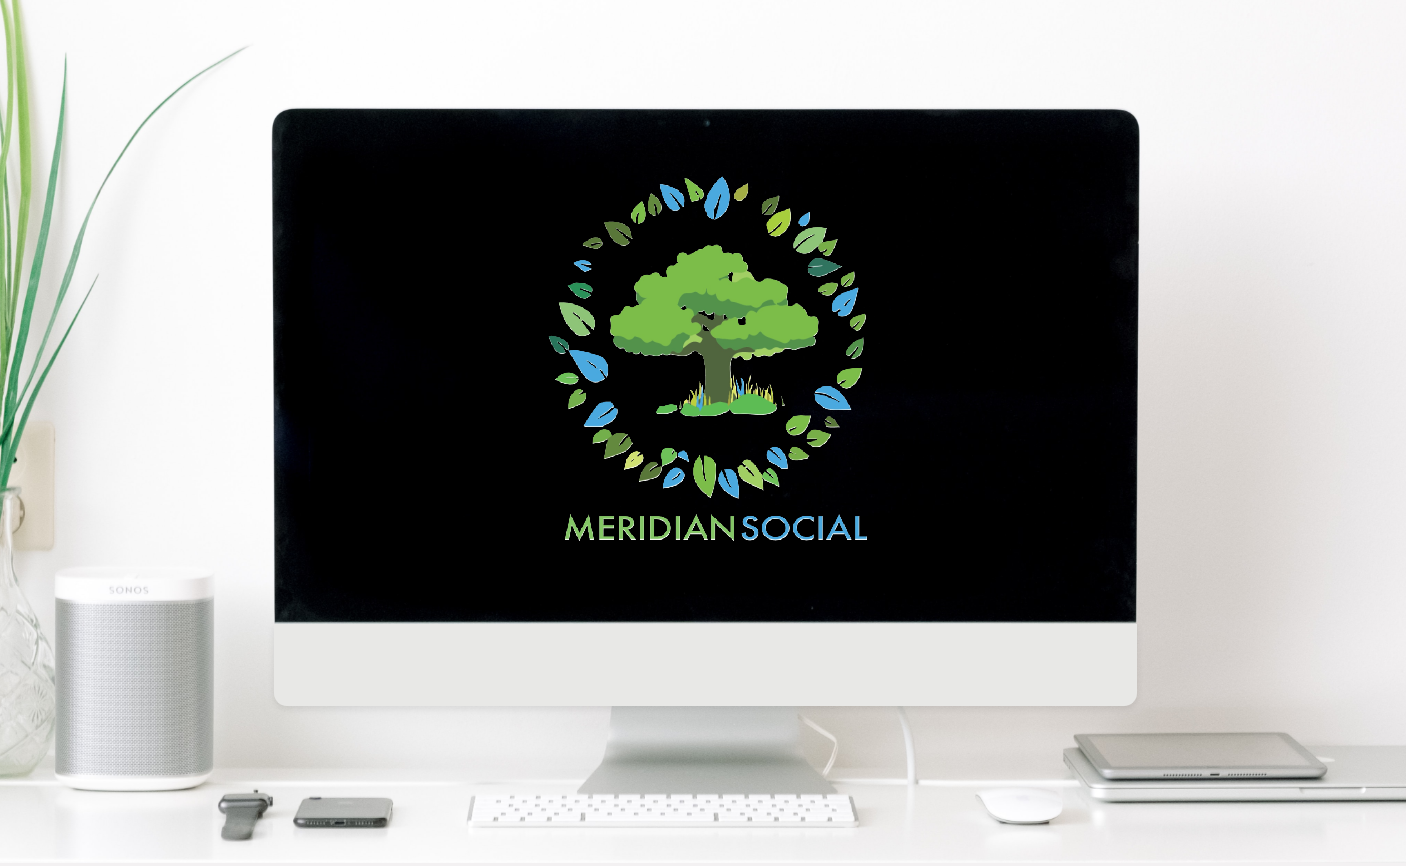 Meridian Social